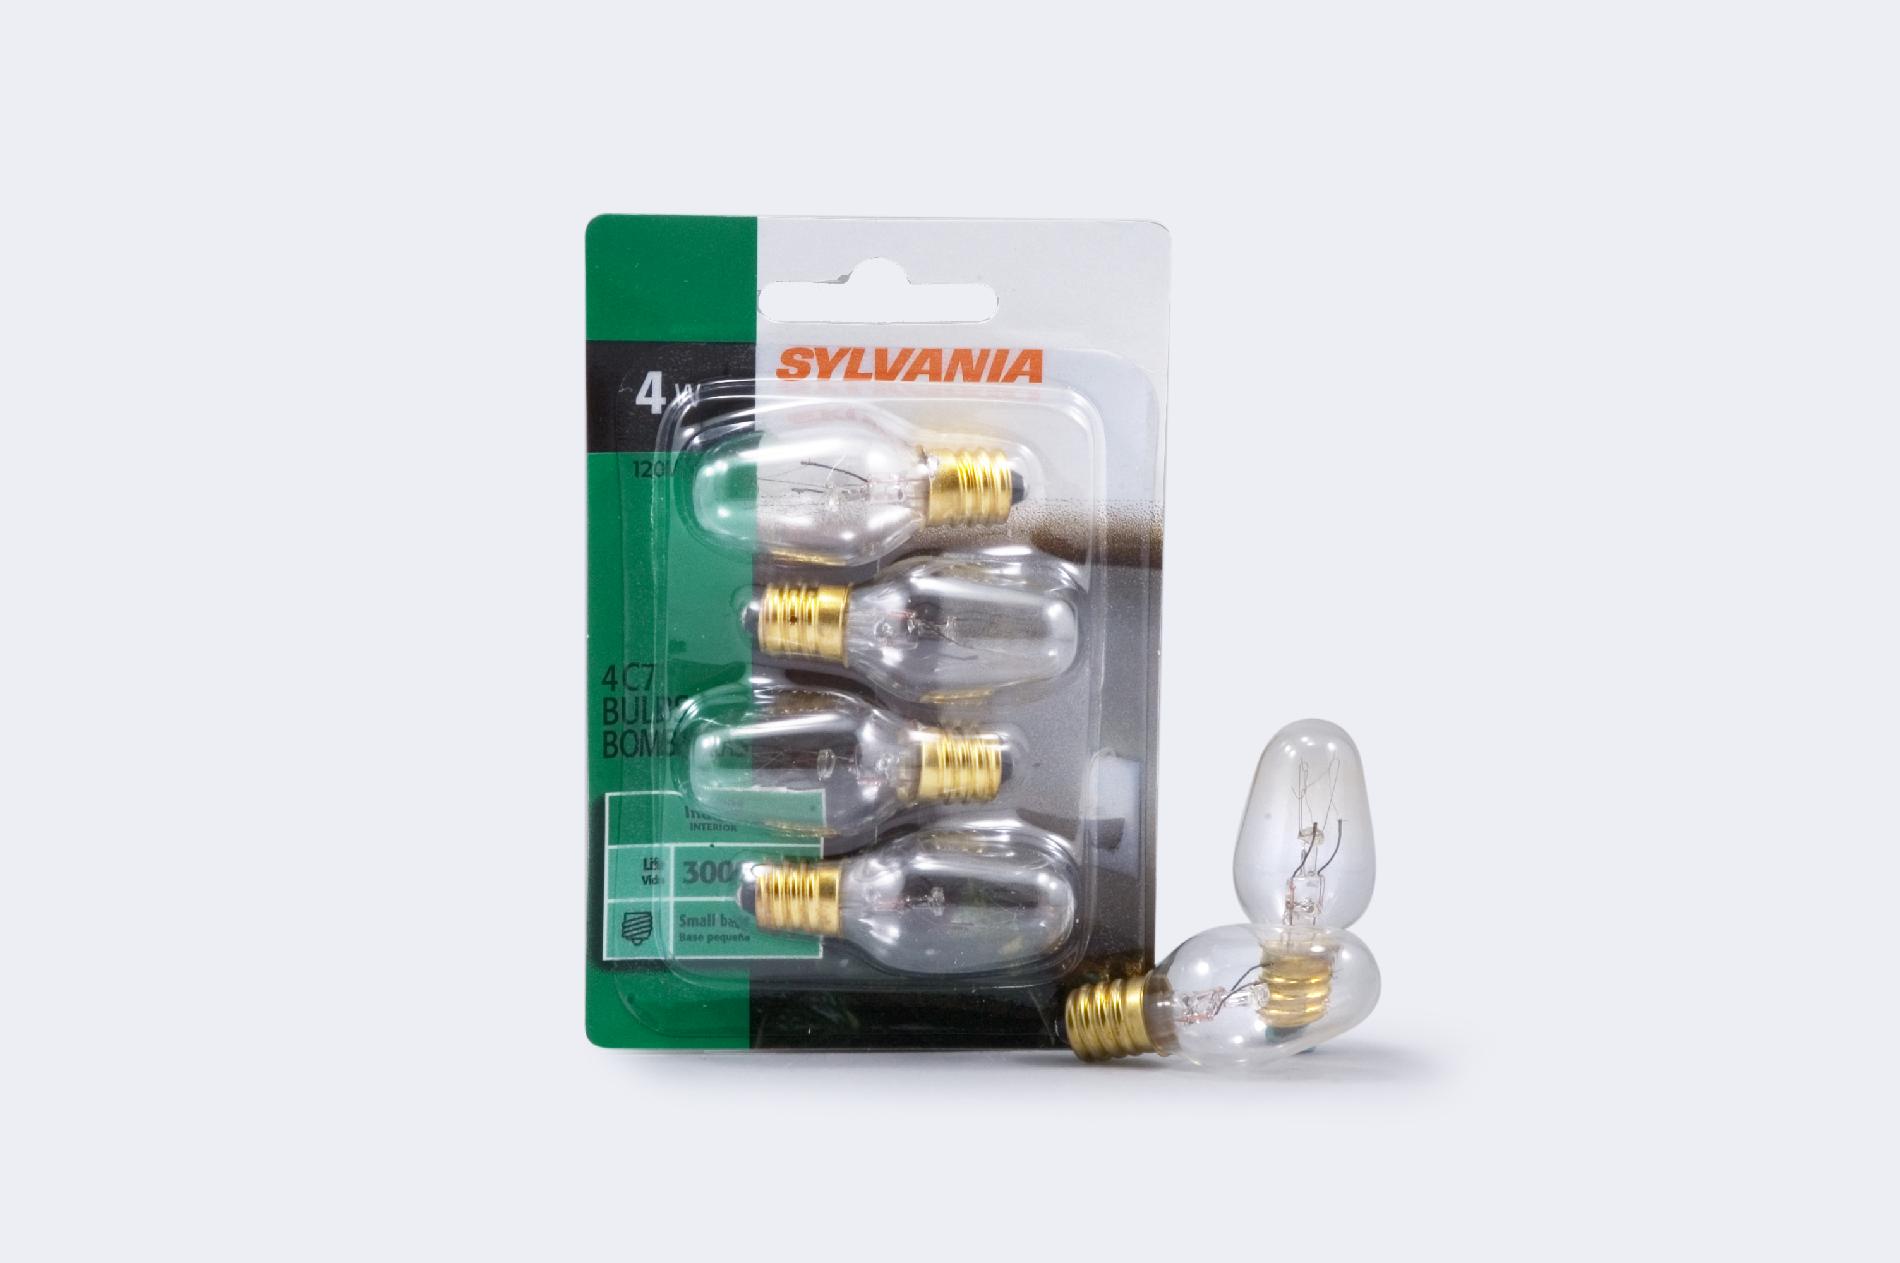 Sylvania Incandescent Night Lamp C7-Candelabra Base 120V Light Bulb 4W - 4 Pack